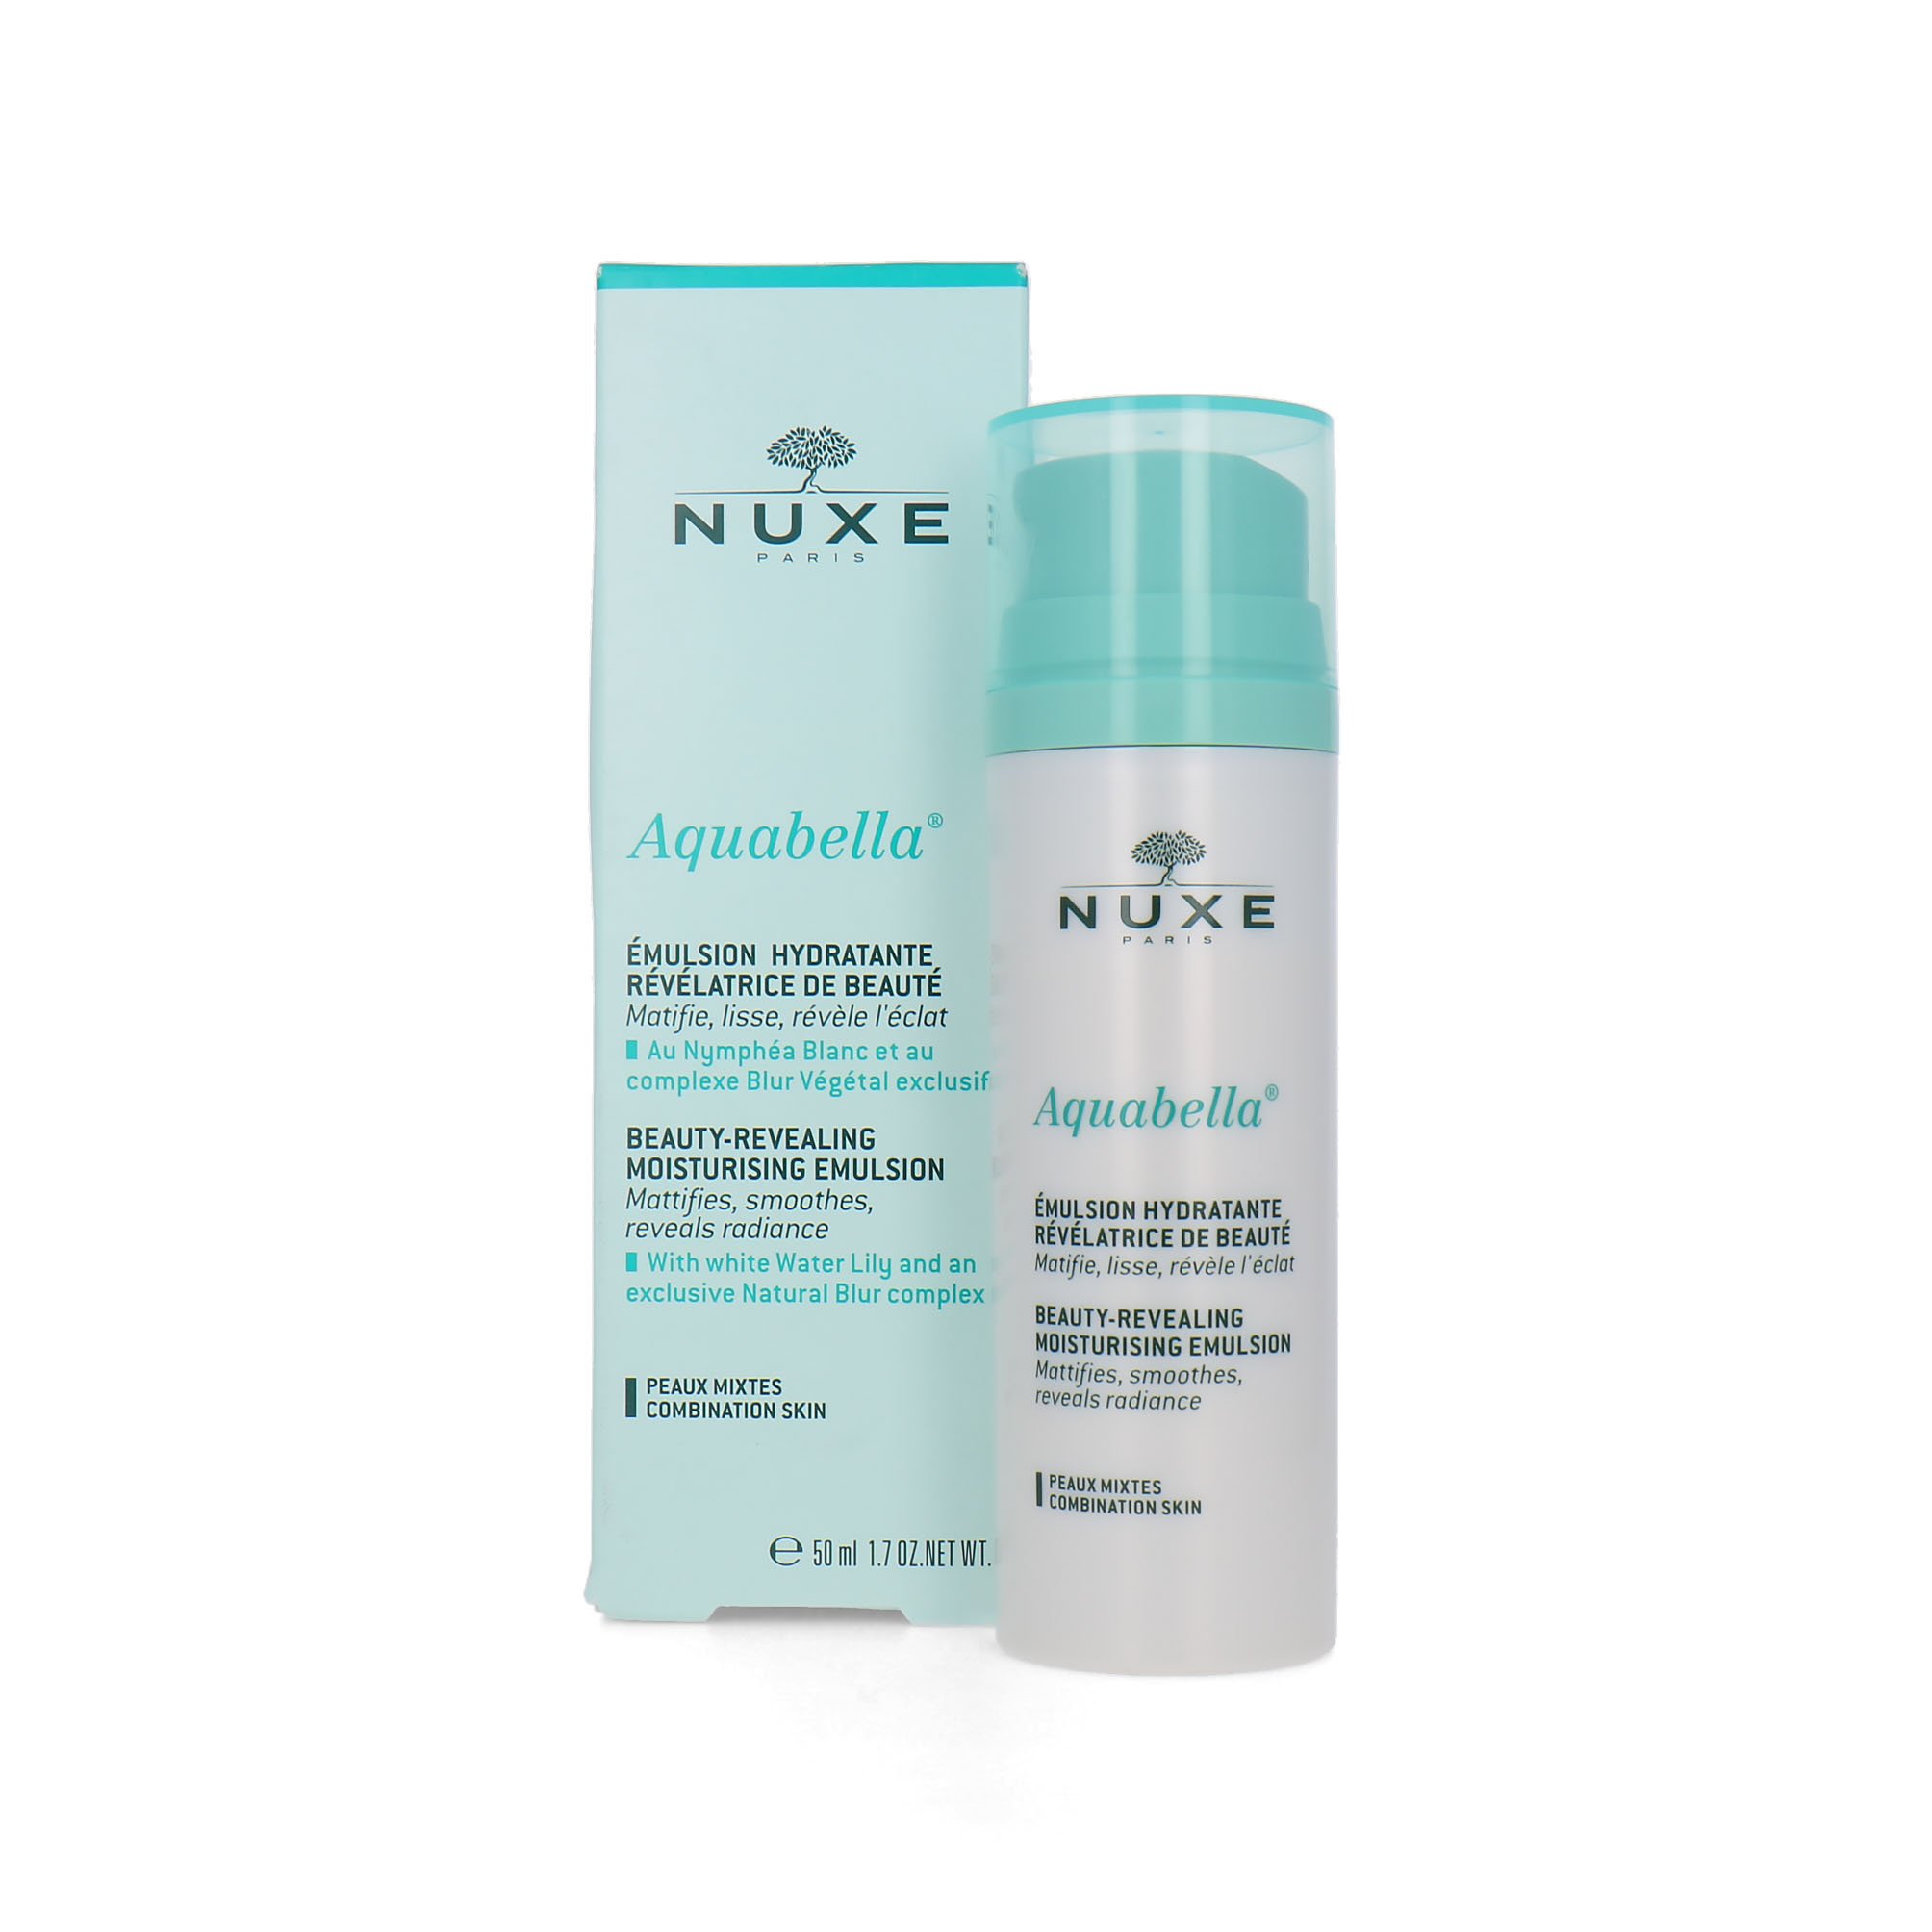 Acheter Nuxe Aquabella Beauty-Revealing Moisturising Emulsion - 50 ml